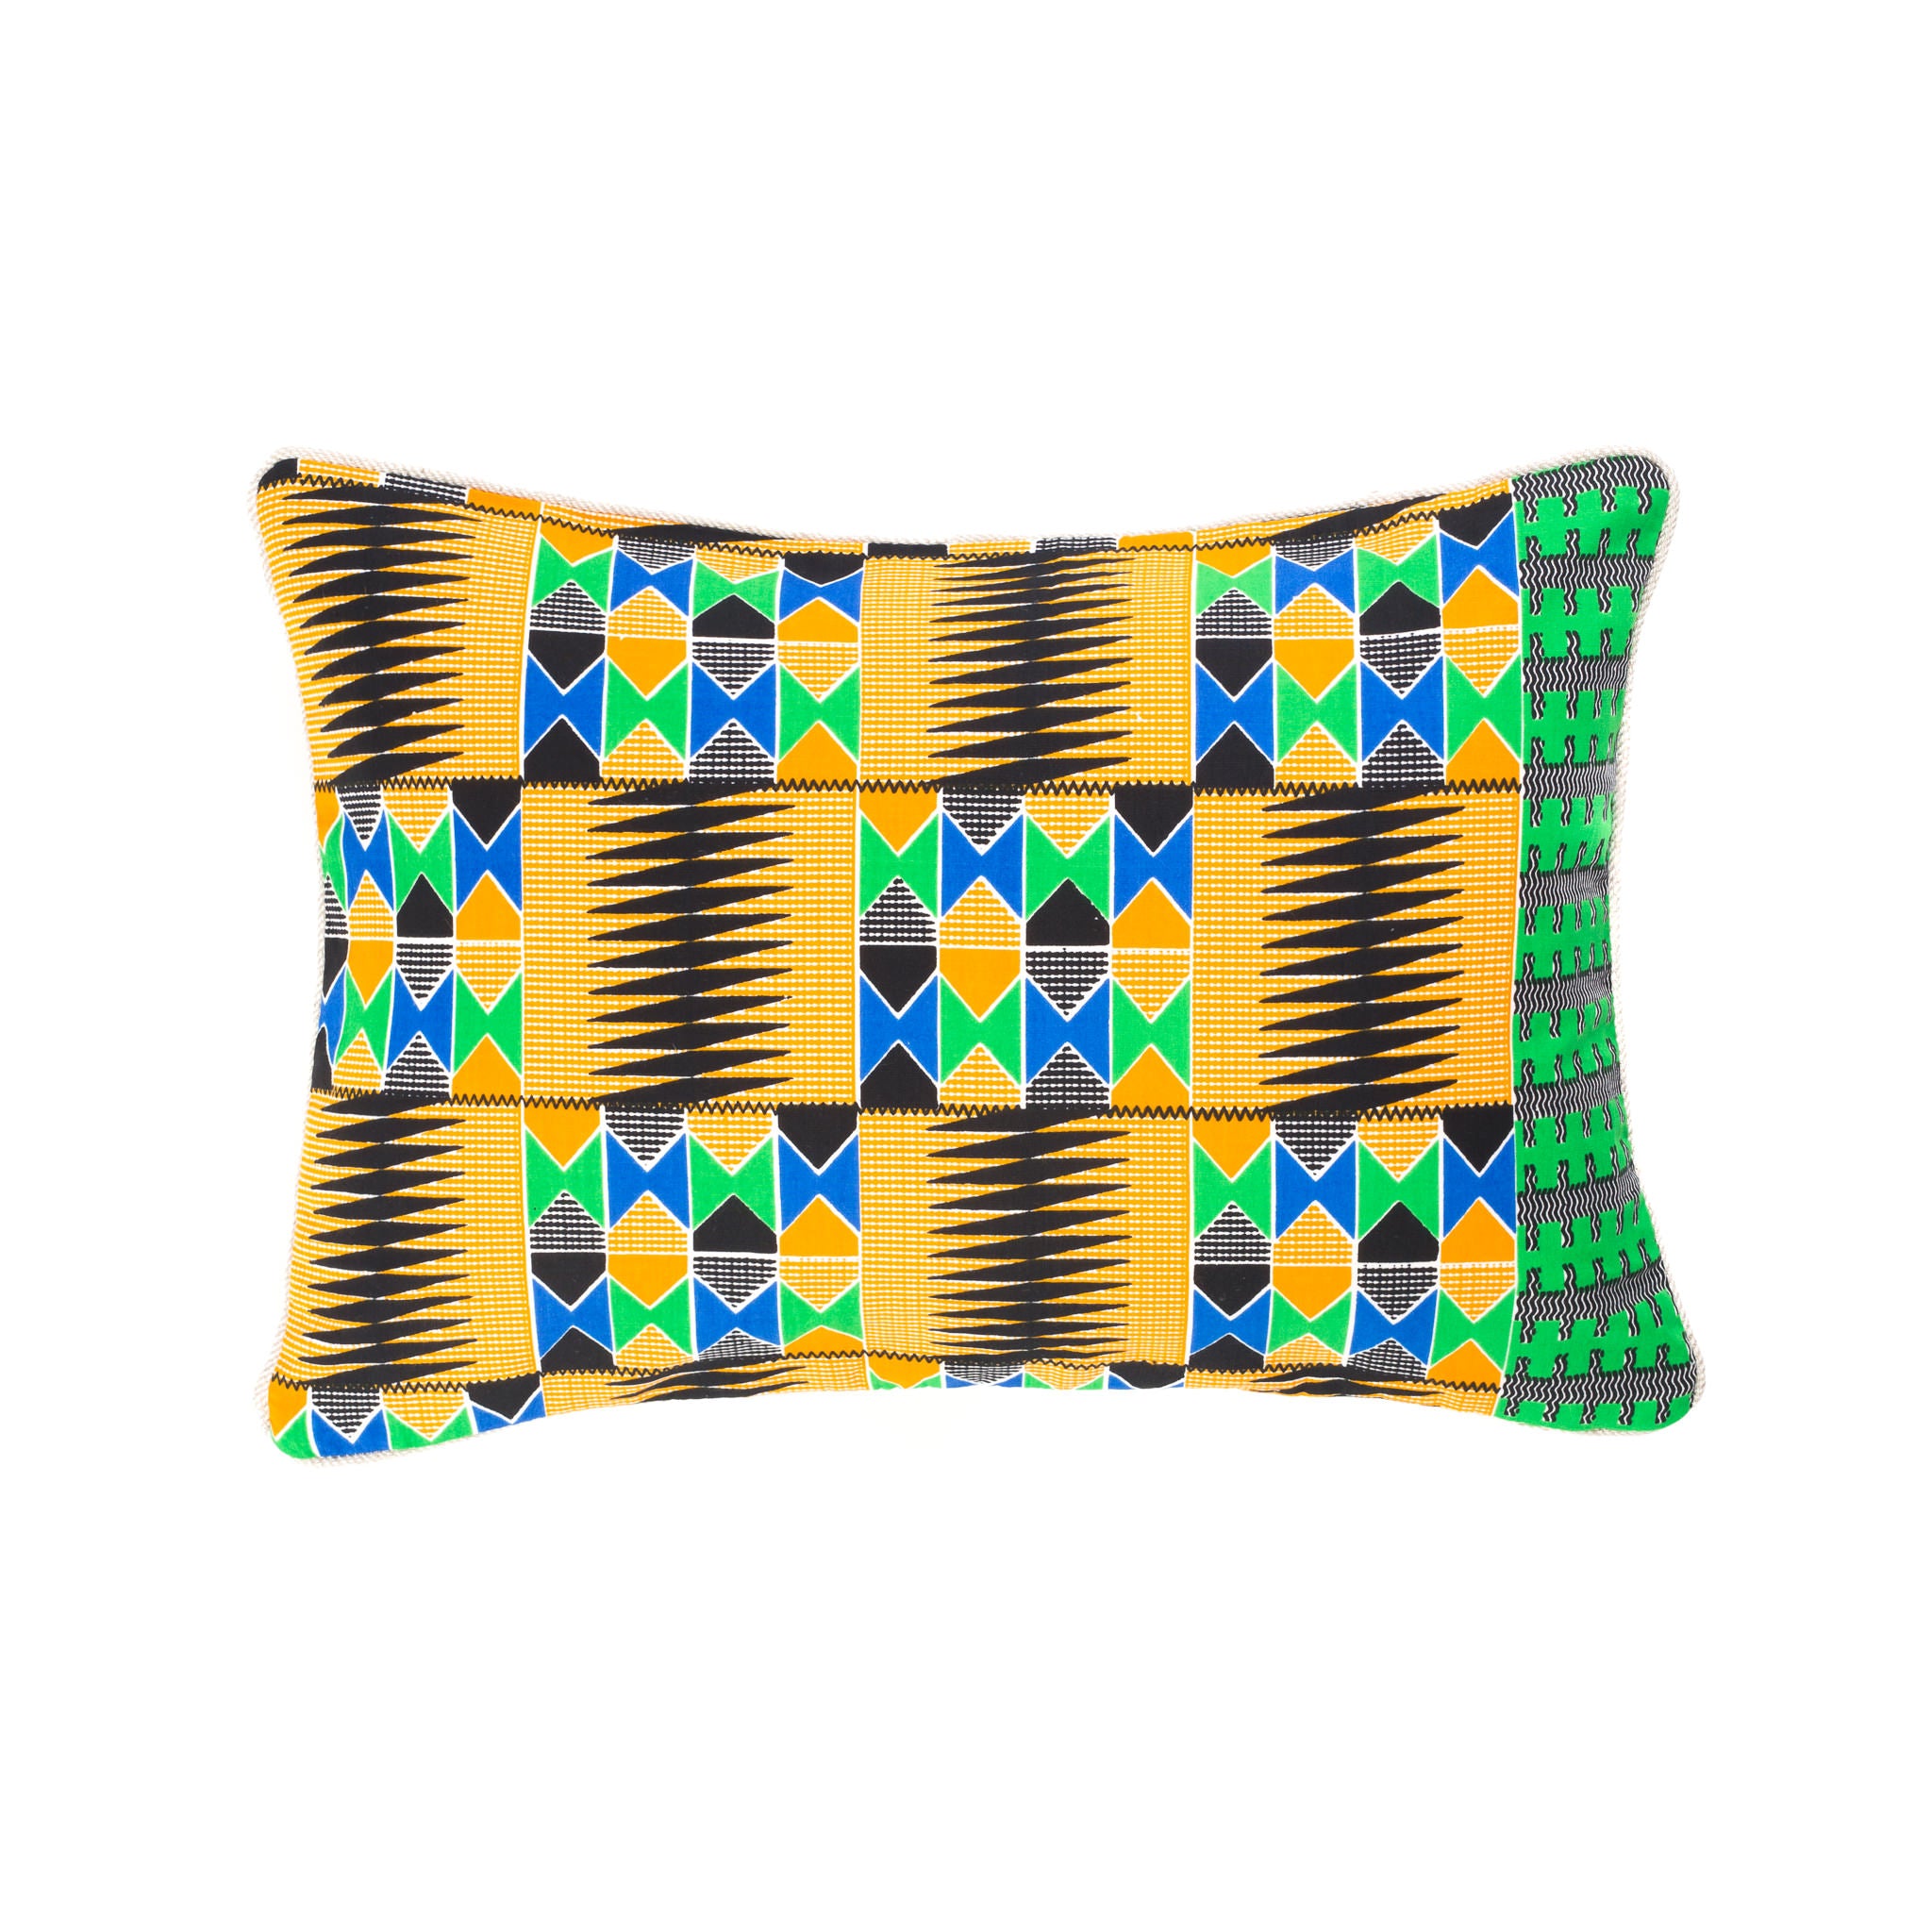 Kente/Printed/Cotton/Ghana/Africa/Scatter/Cushion/Mustard/Yellow/Green/Blue/Black/Pattern/